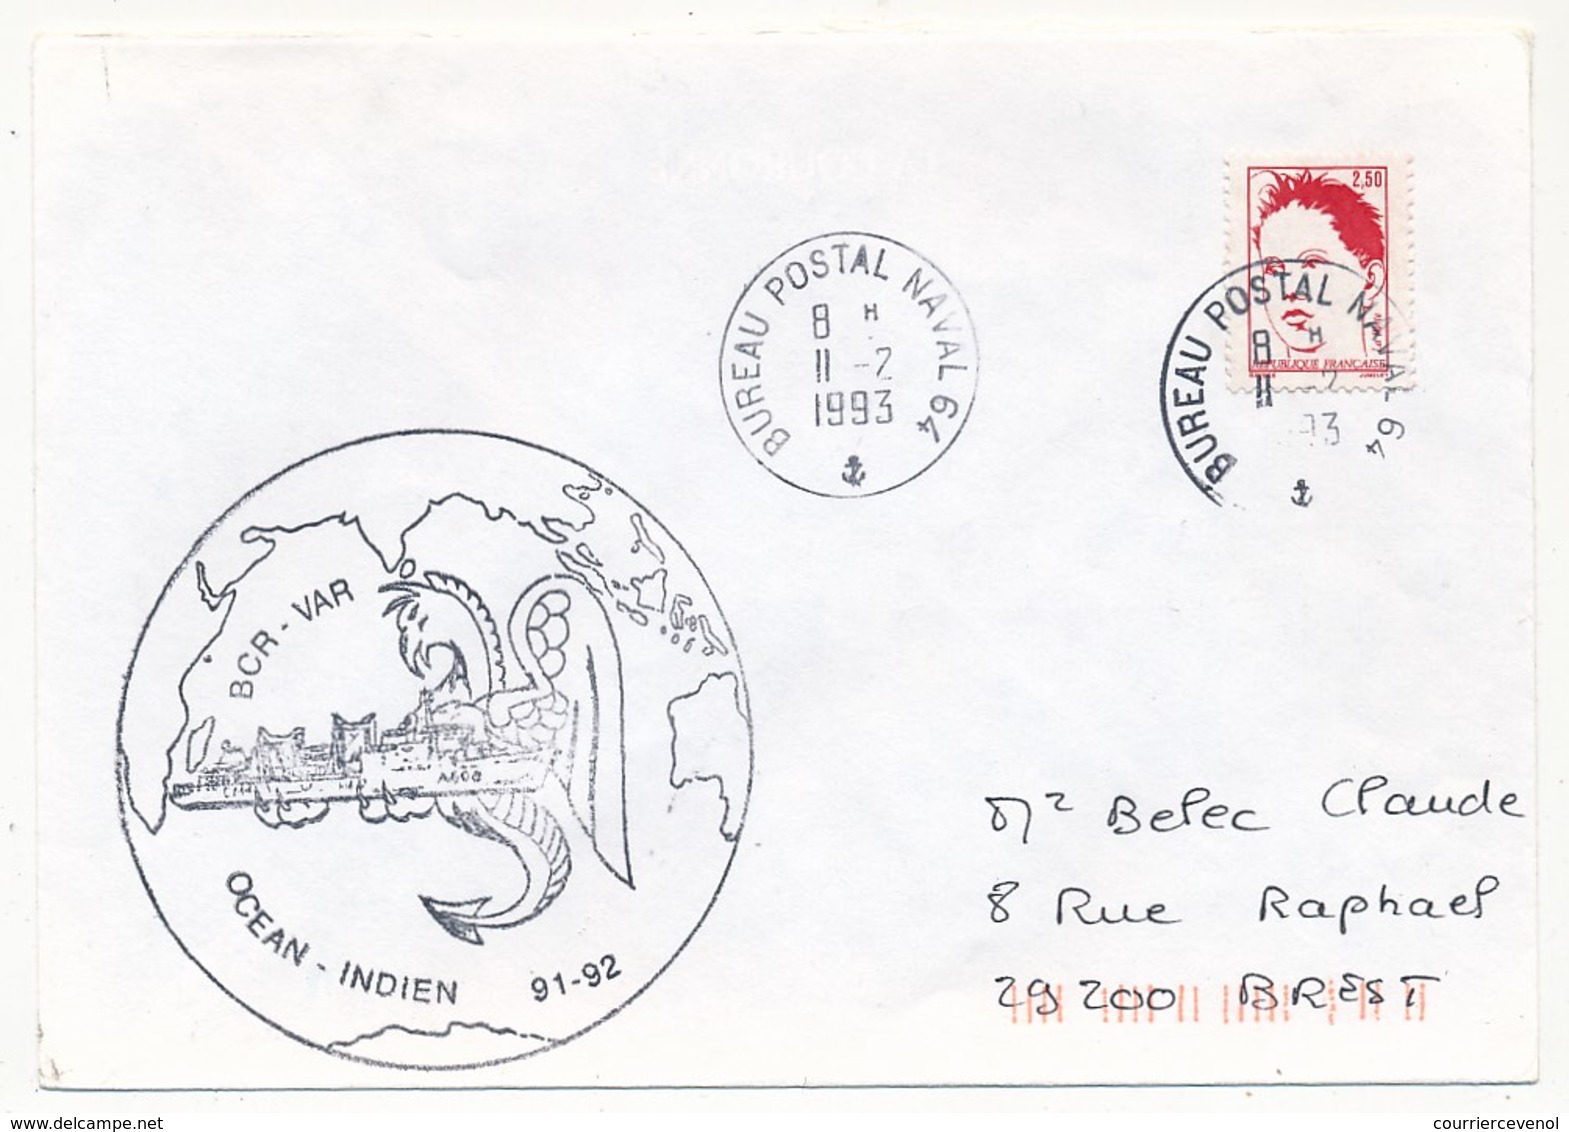 FRANCE - 2,50 Obl Bureau Postal Naval 64 / B.C.R VAR - Océan Indien 91-92 - 1993 - Poste Navale